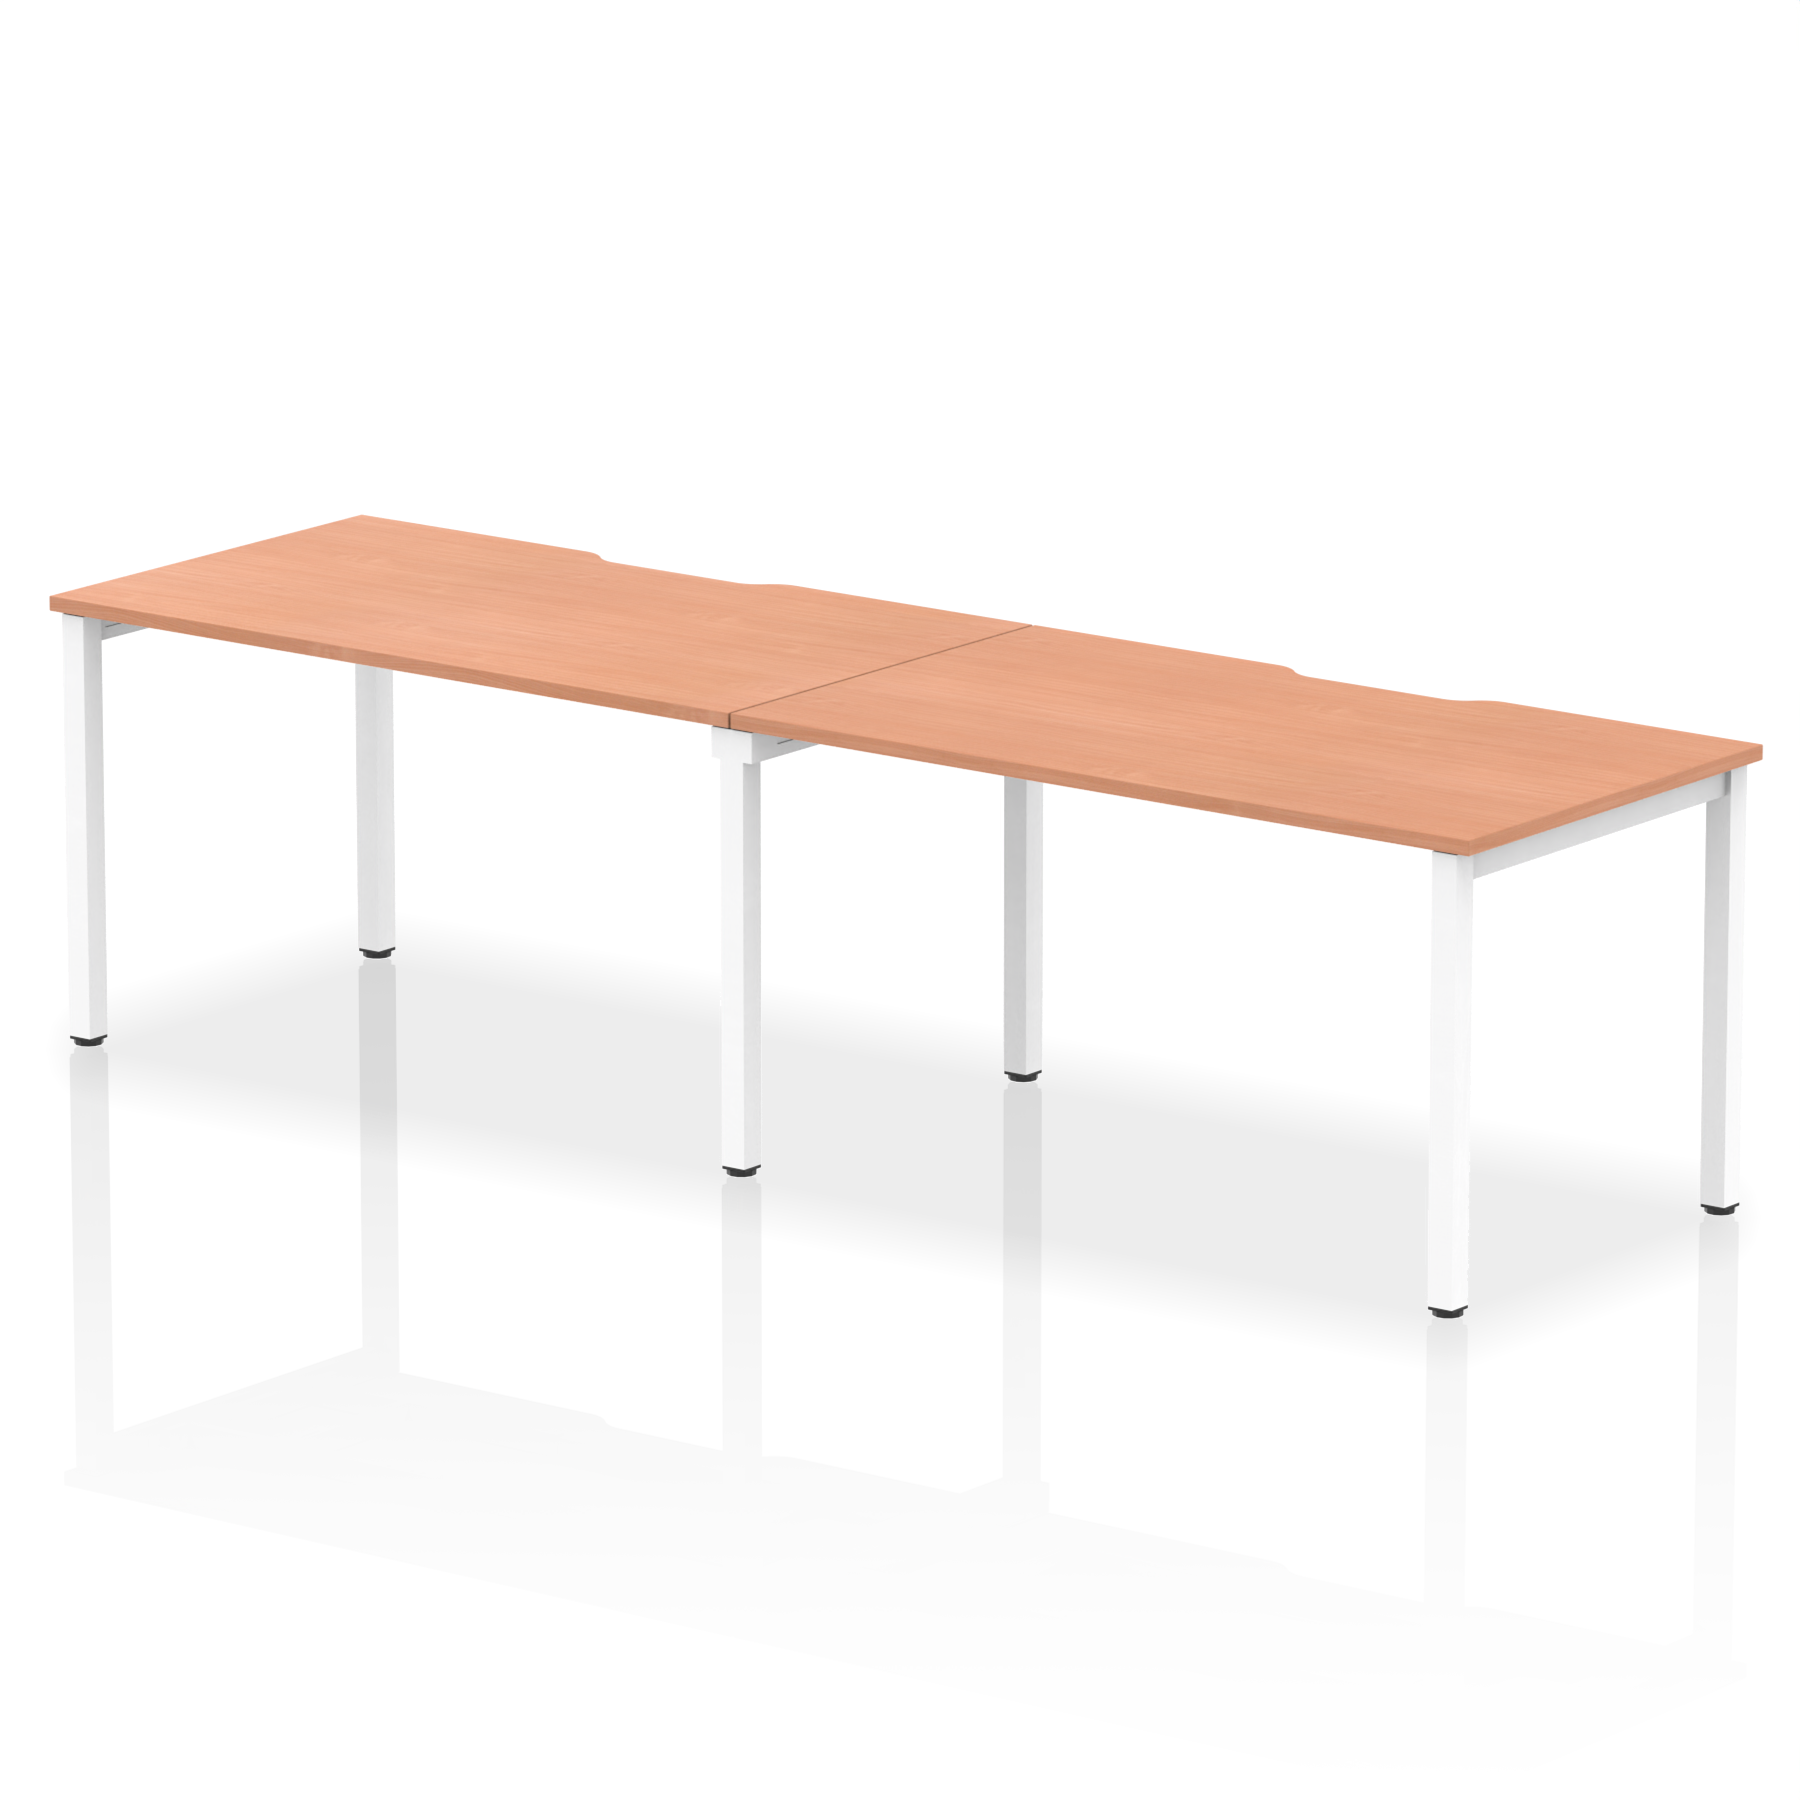 Evolve Plus Single Row Bench Desk - 2 Person